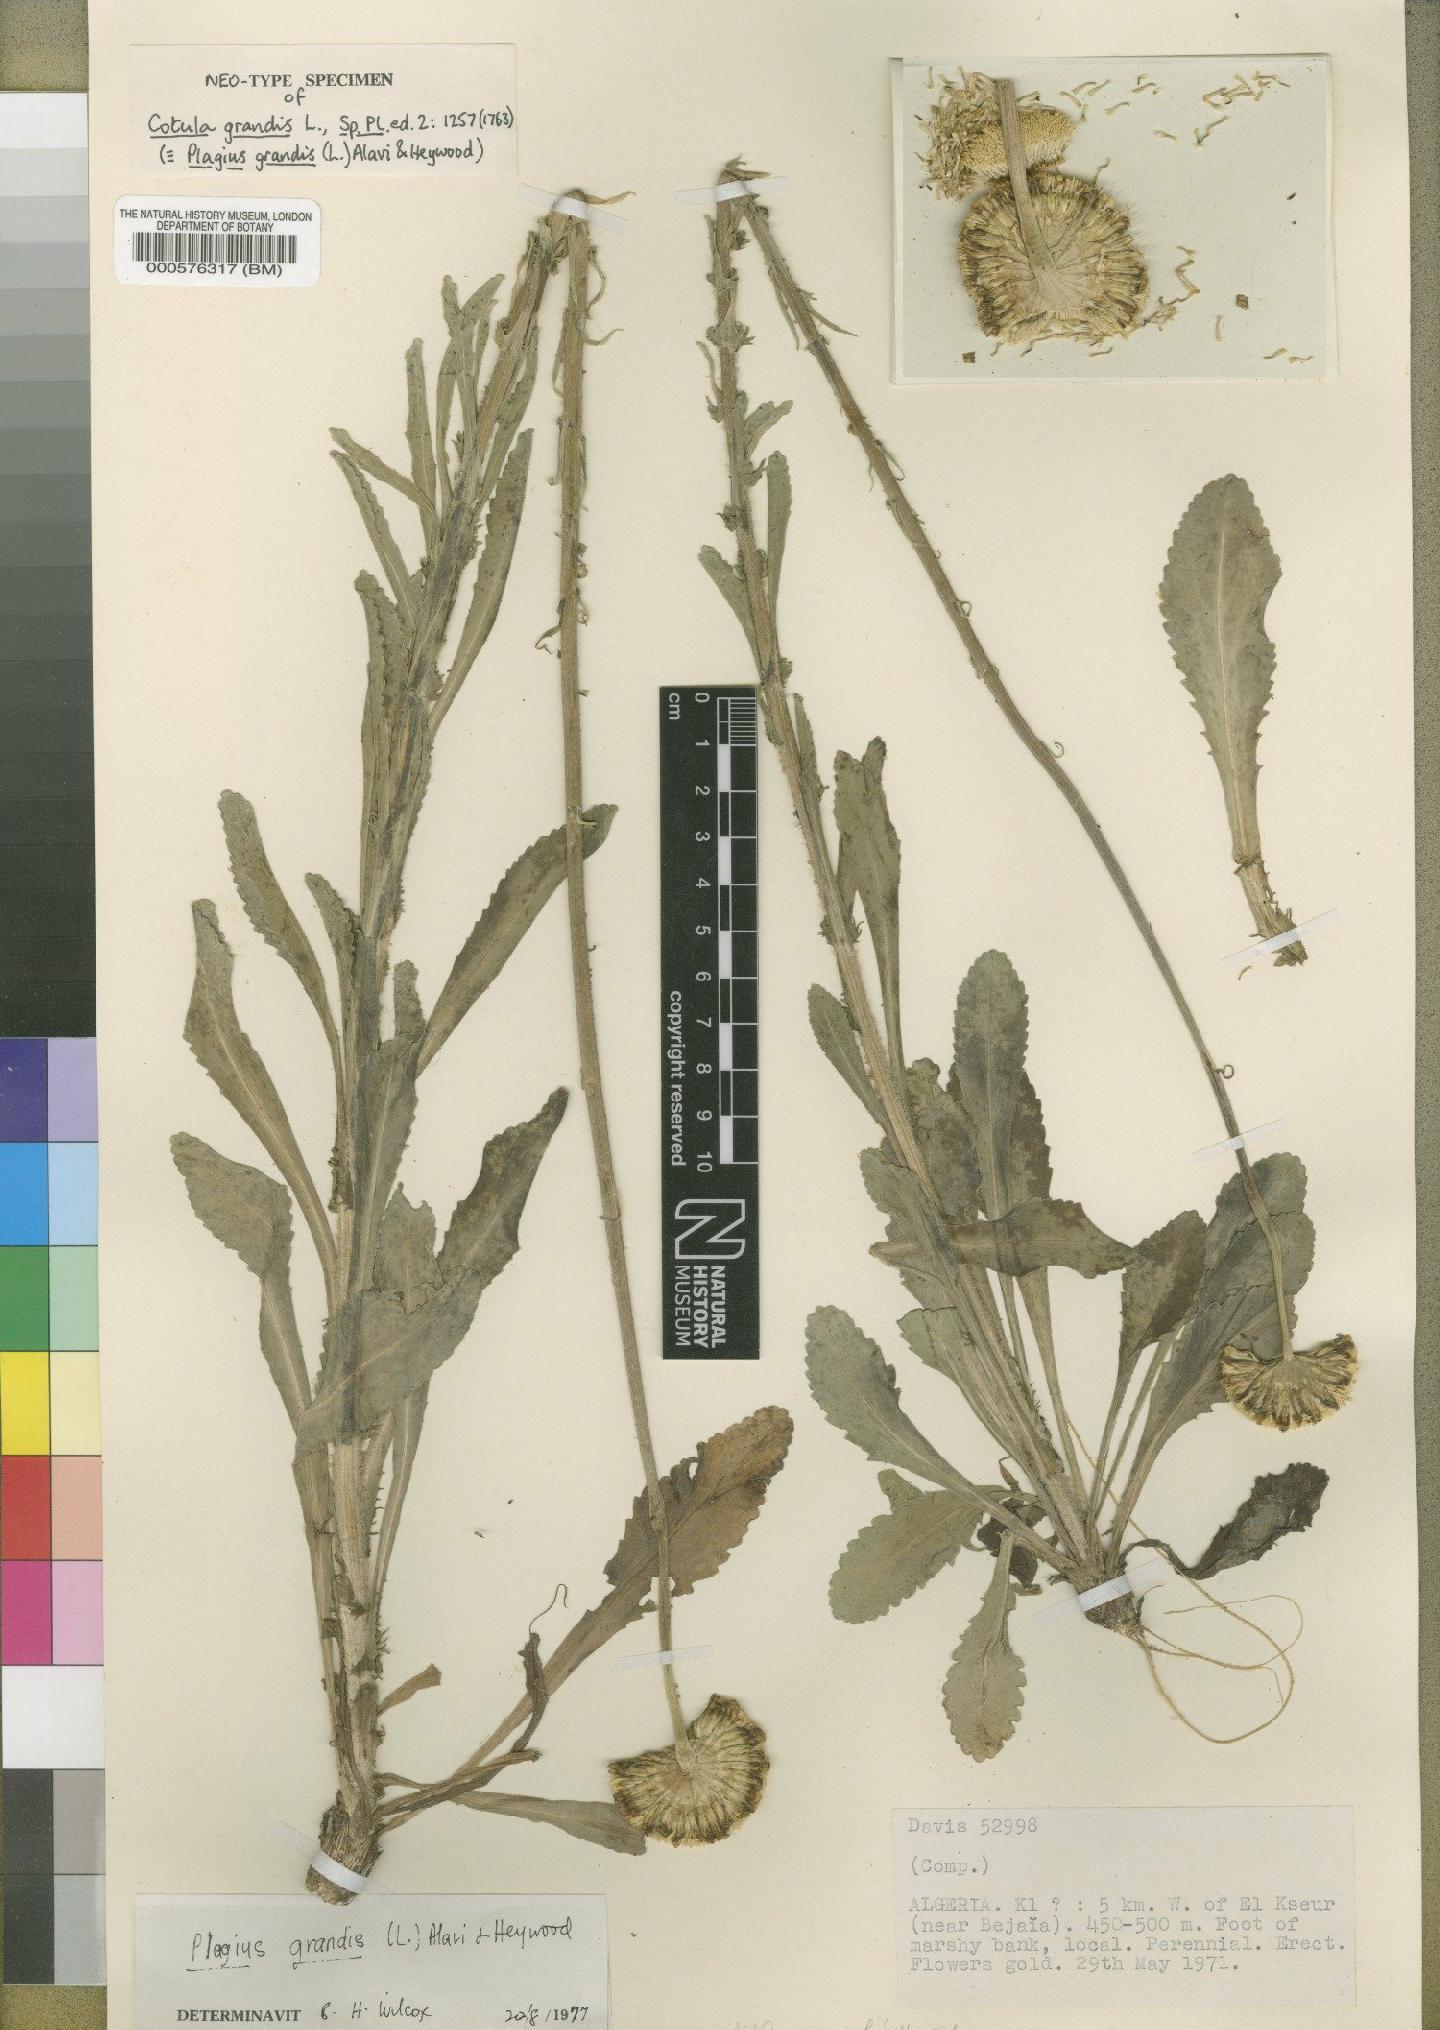 To NHMUK collection (Plagius grandis (L.) Alavi & Heywood; Neotype; NHMUK:ecatalogue:4529496)